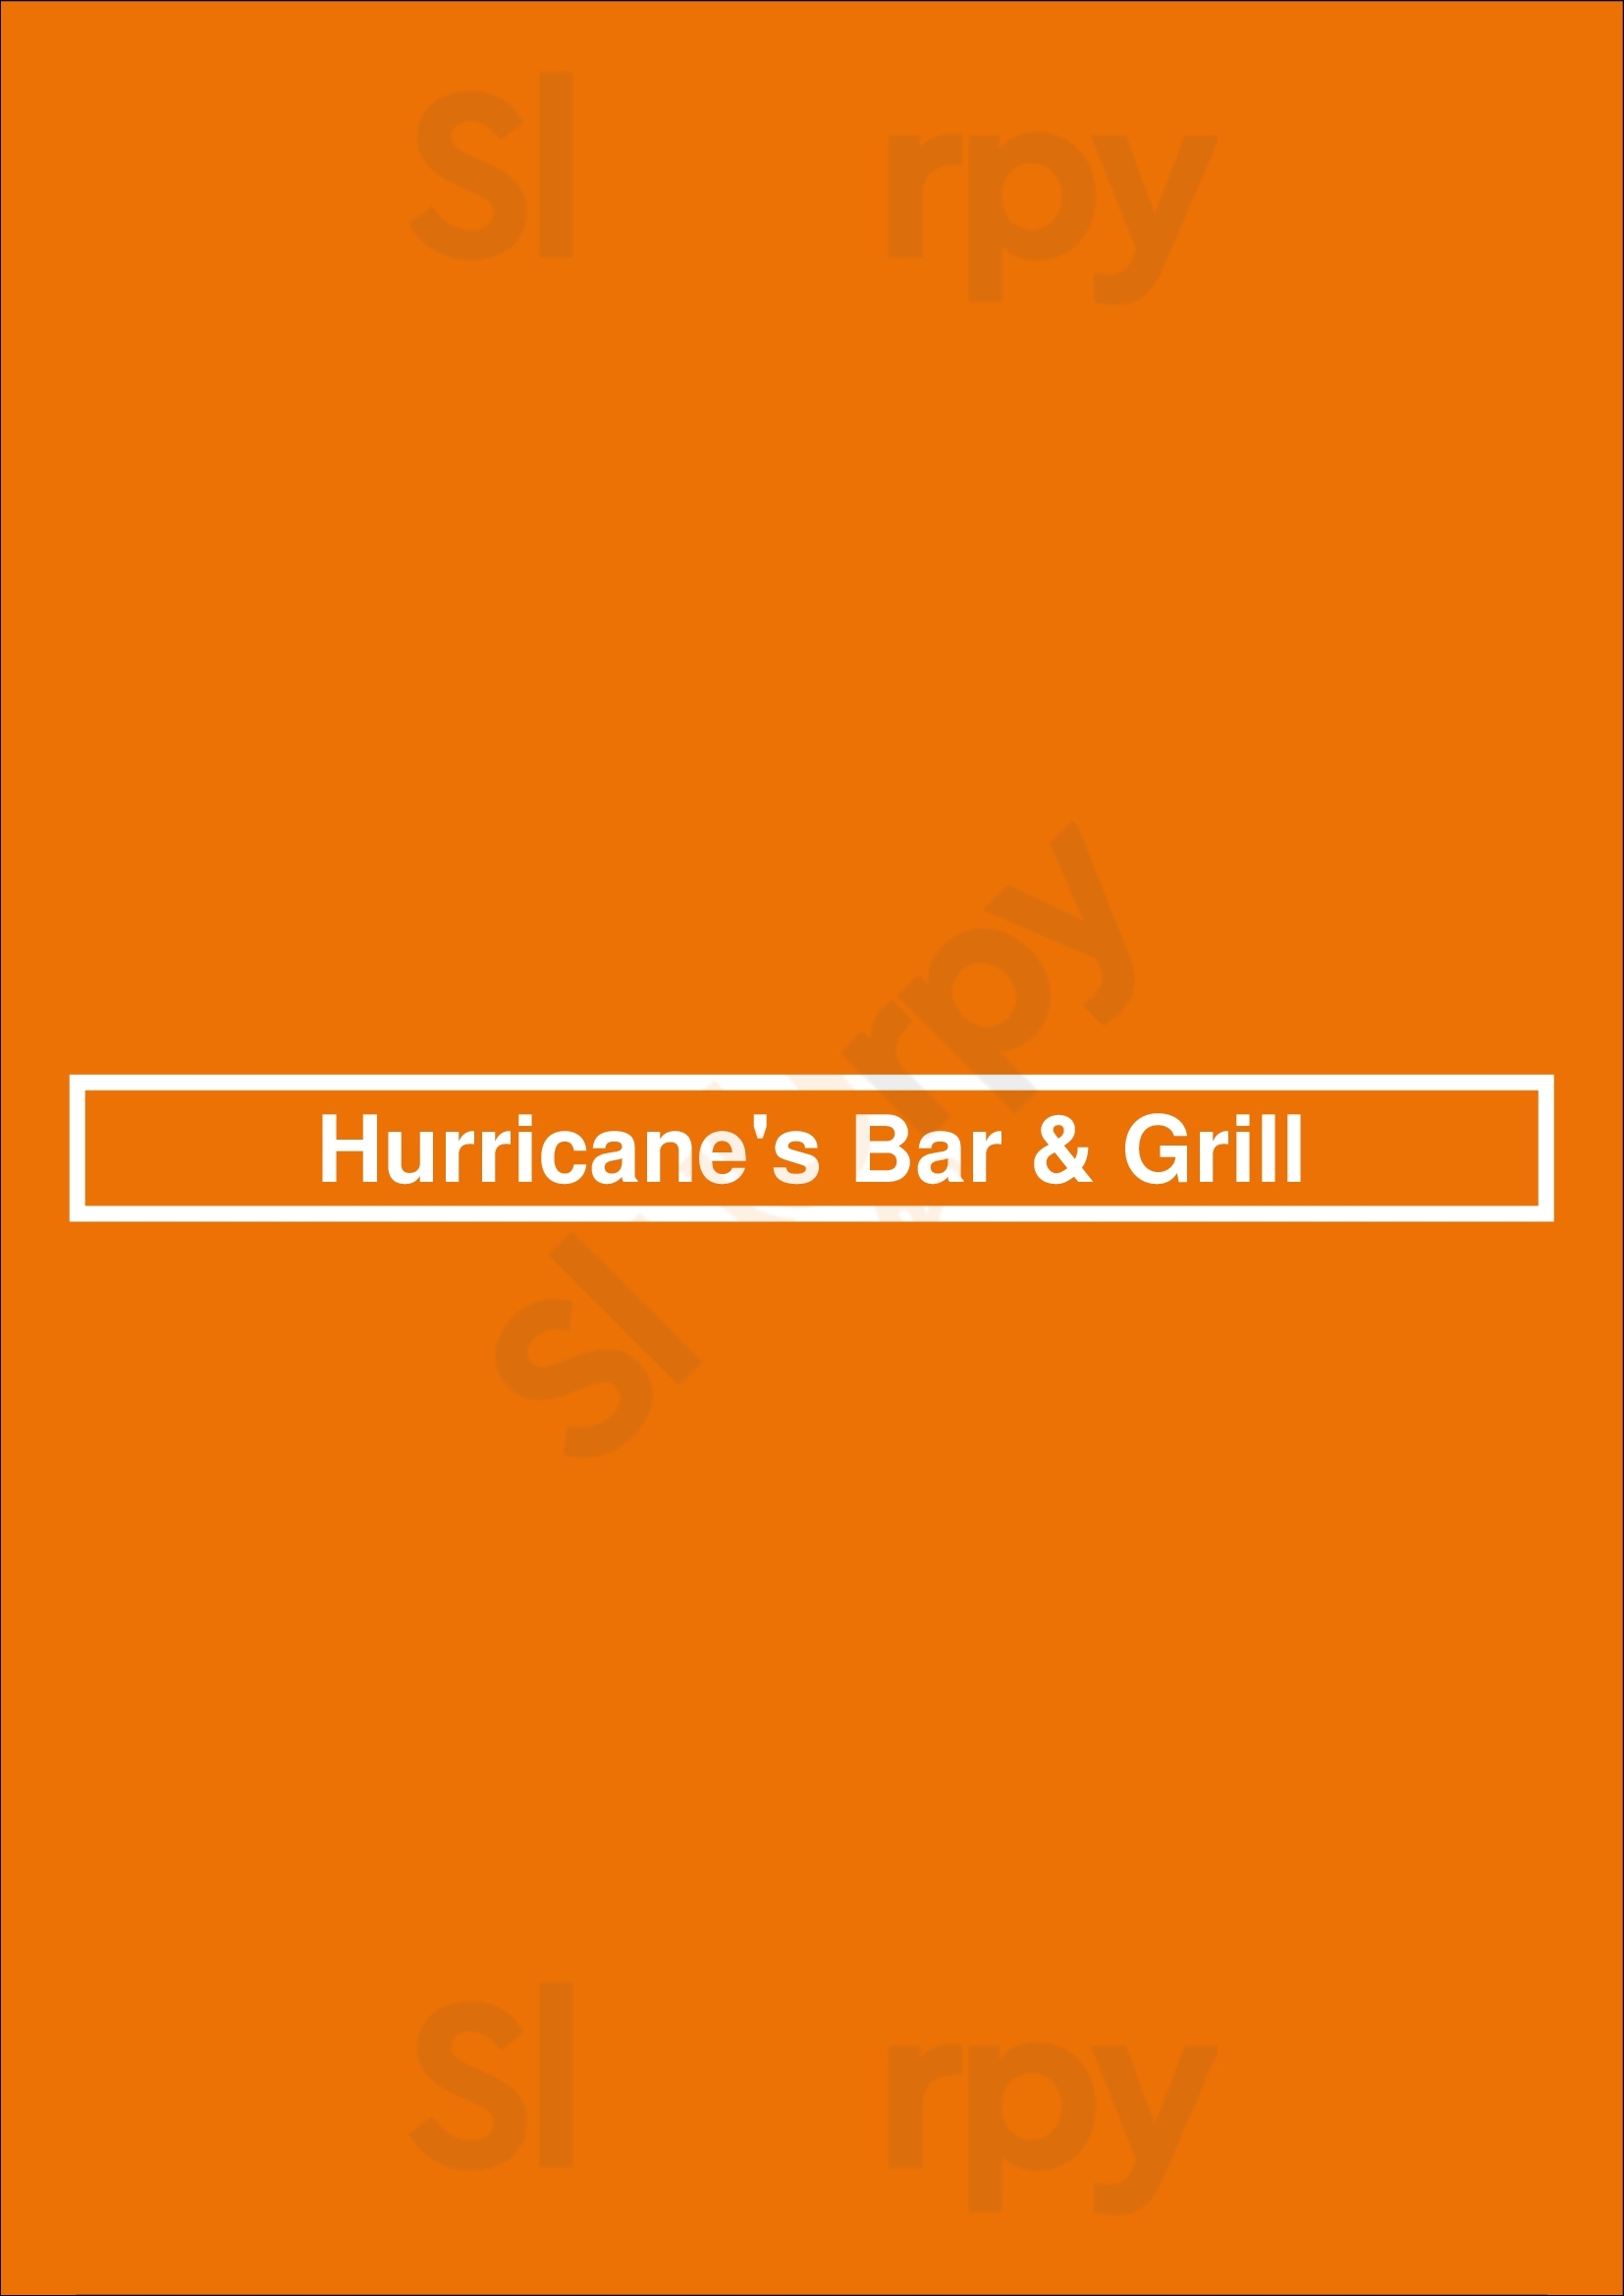 Hurricanes Bar & Grill Huntington Beach Menu - 1